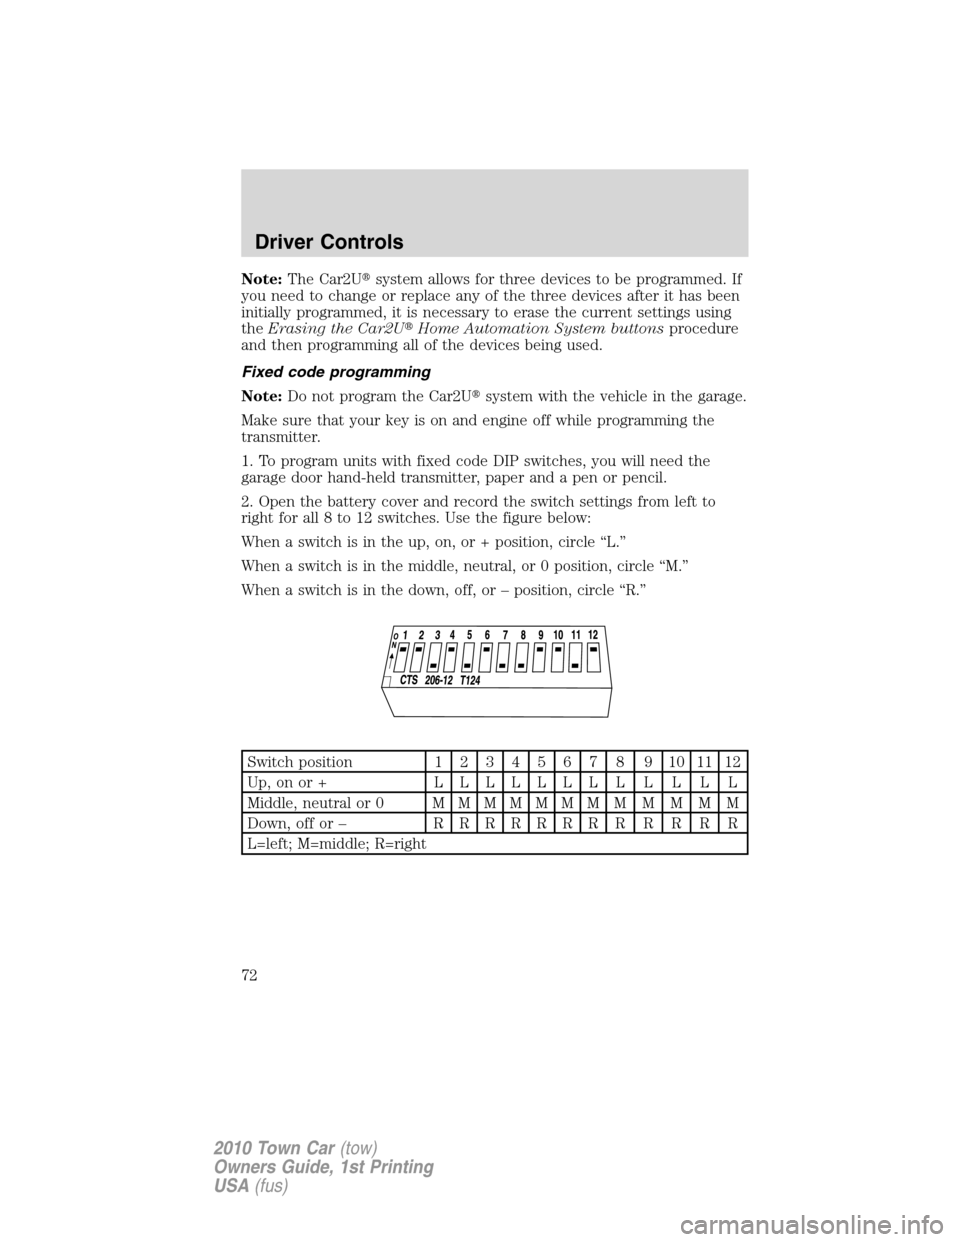 LINCOLN TOWN CAR 2010 Manual PDF Note:The Car2Usystem allows for three devices to be programmed. If
you need to change or replace any of the three devices after it has been
initially programmed, it is necessary to erase the current 